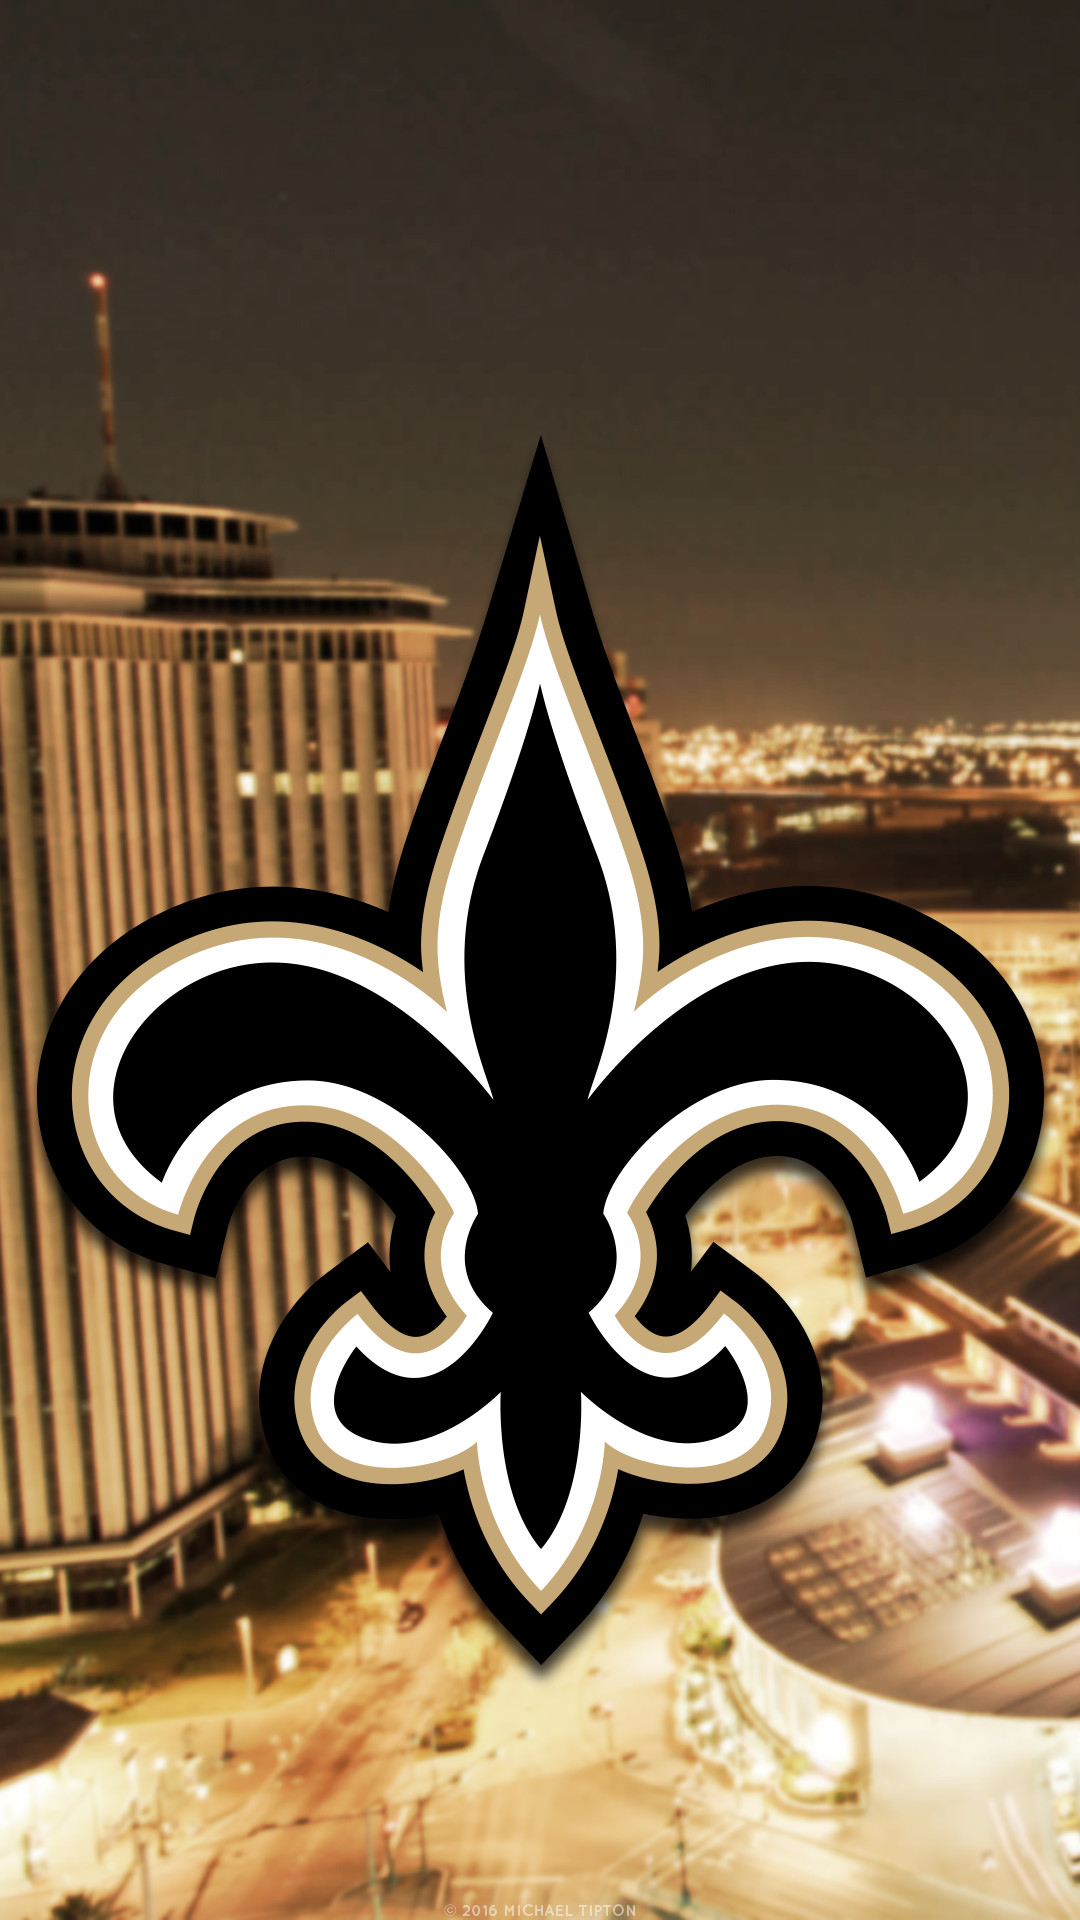 1080x1920 ... New Orleans Saints city 2017 logo wallpaper free iphone 5, 6, 7, galaxy